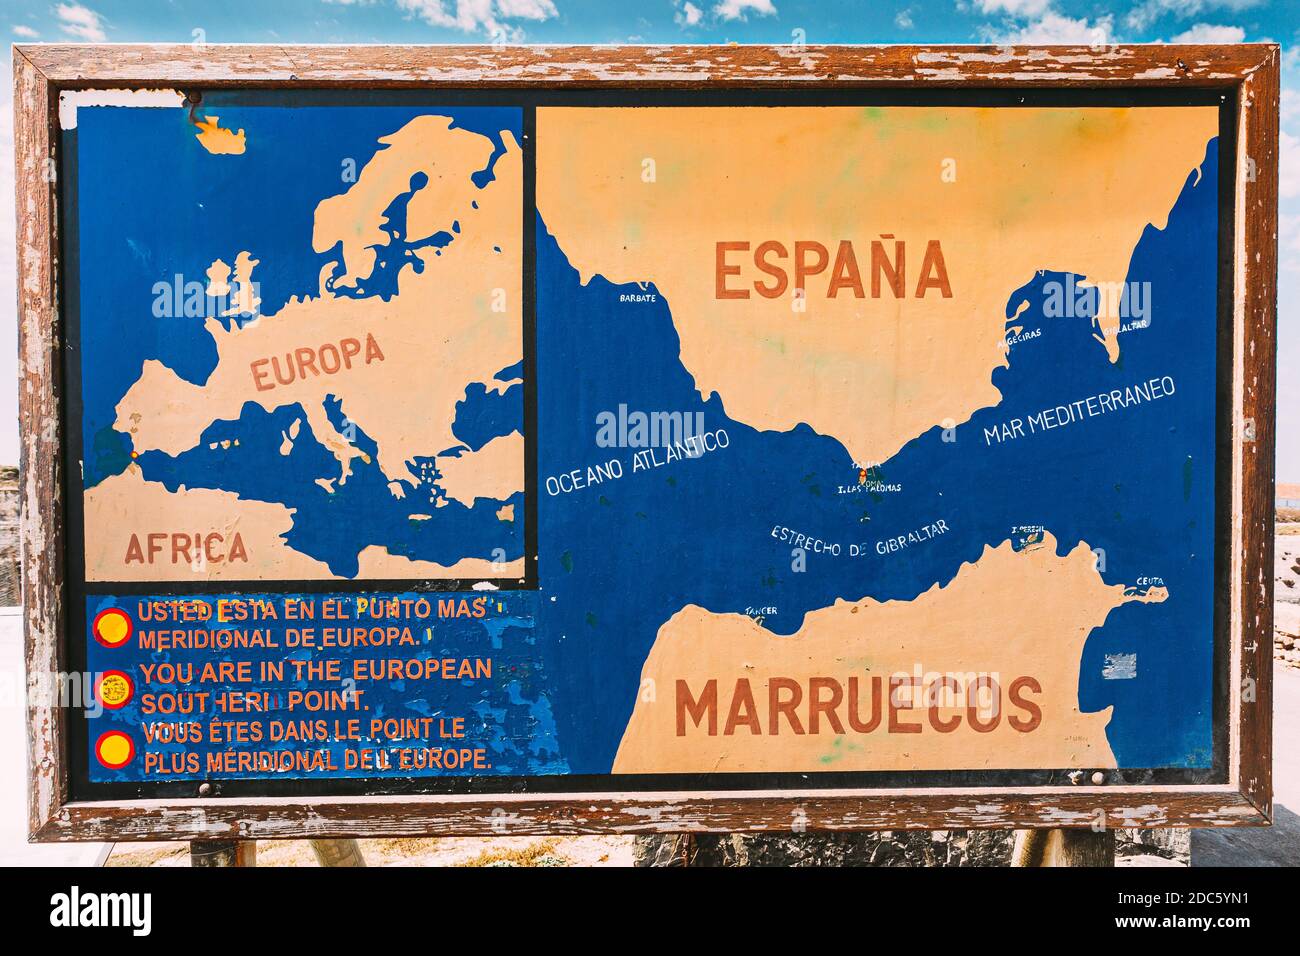 Old painted Information board on the beach Costa de la Luz in Tarifa, Spain. Stock Photo